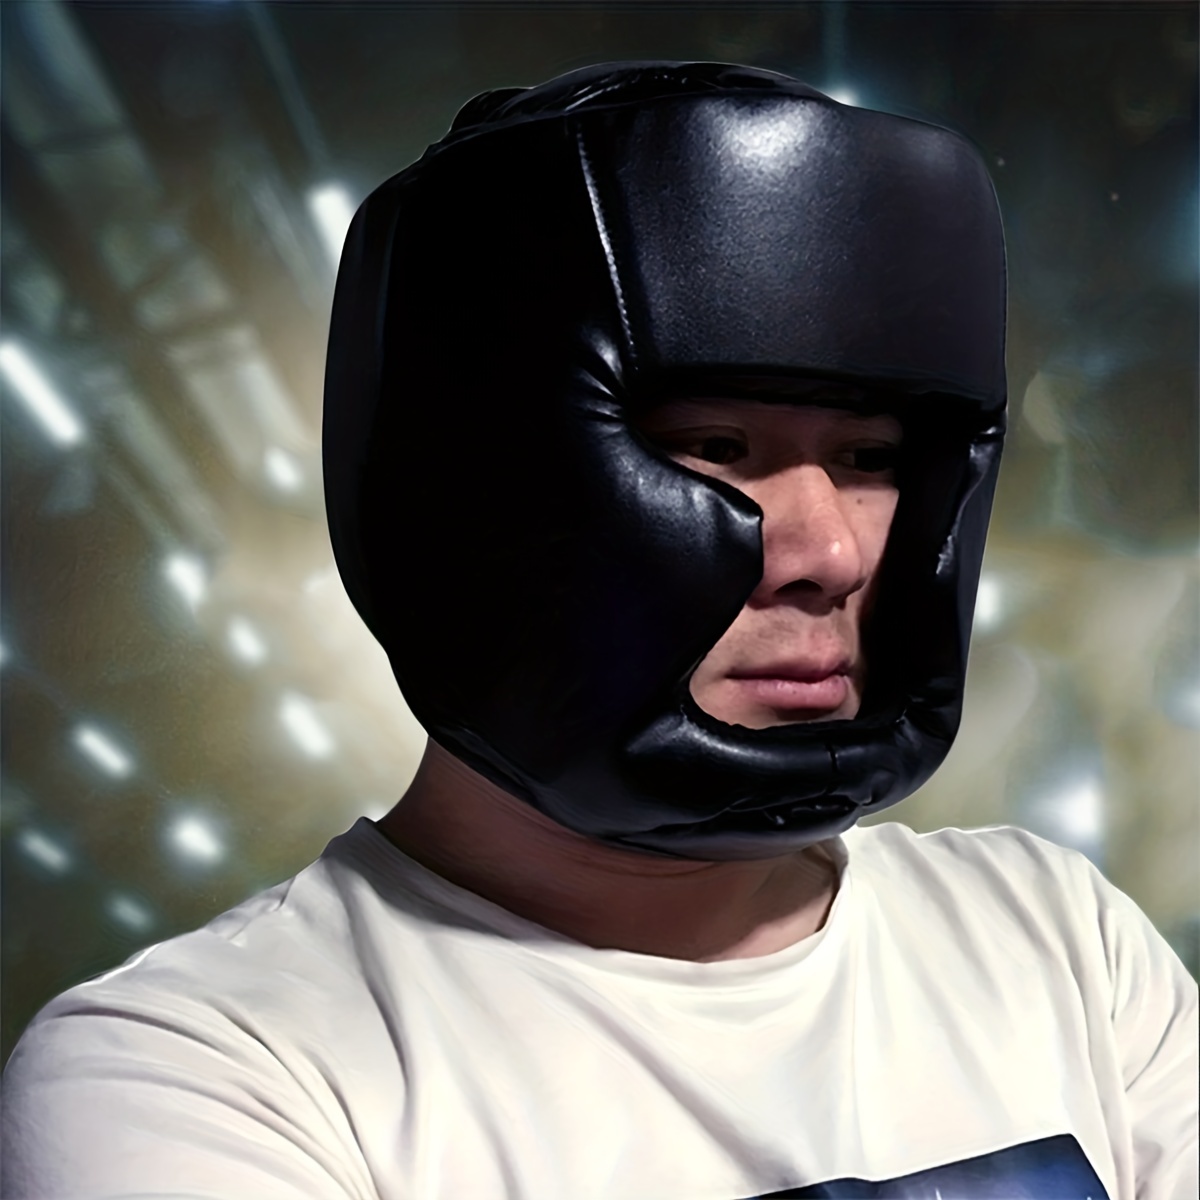 taekwondo boxing muay thai headgear sanda training helmet protective headgear for sanda boxing and taekwondo